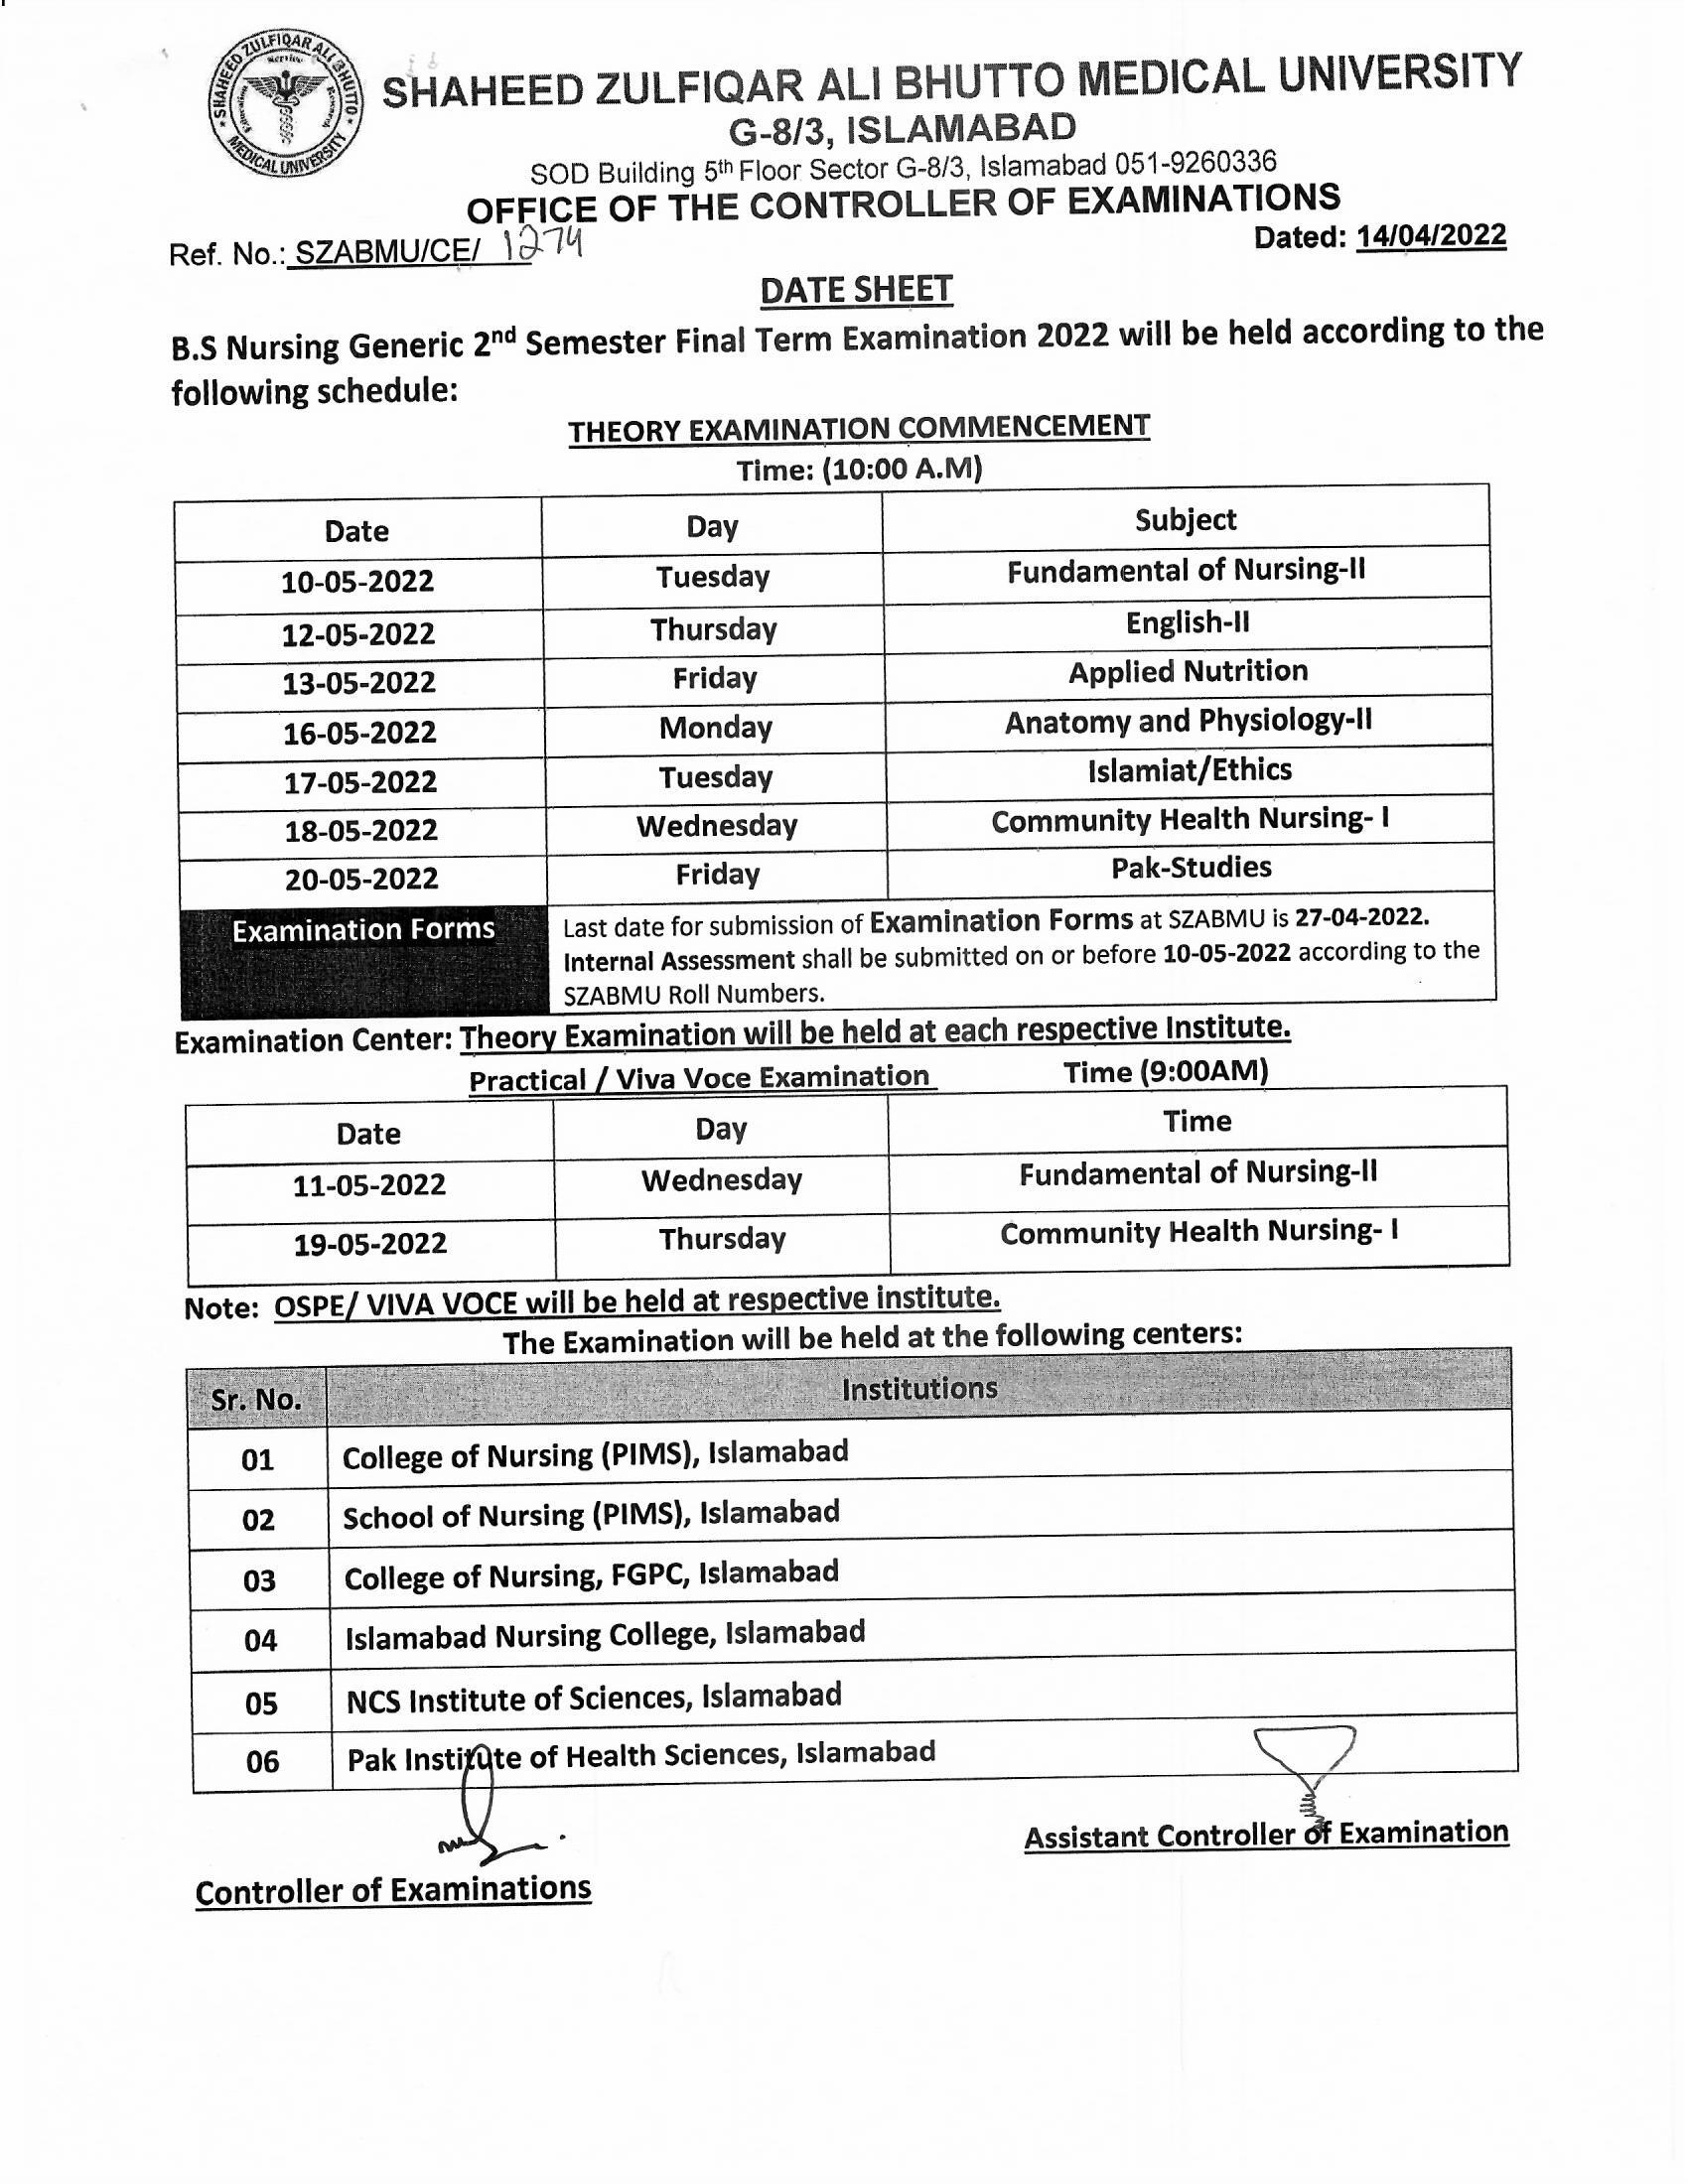 Date Sheets - Nursing Final Term Examination 2022